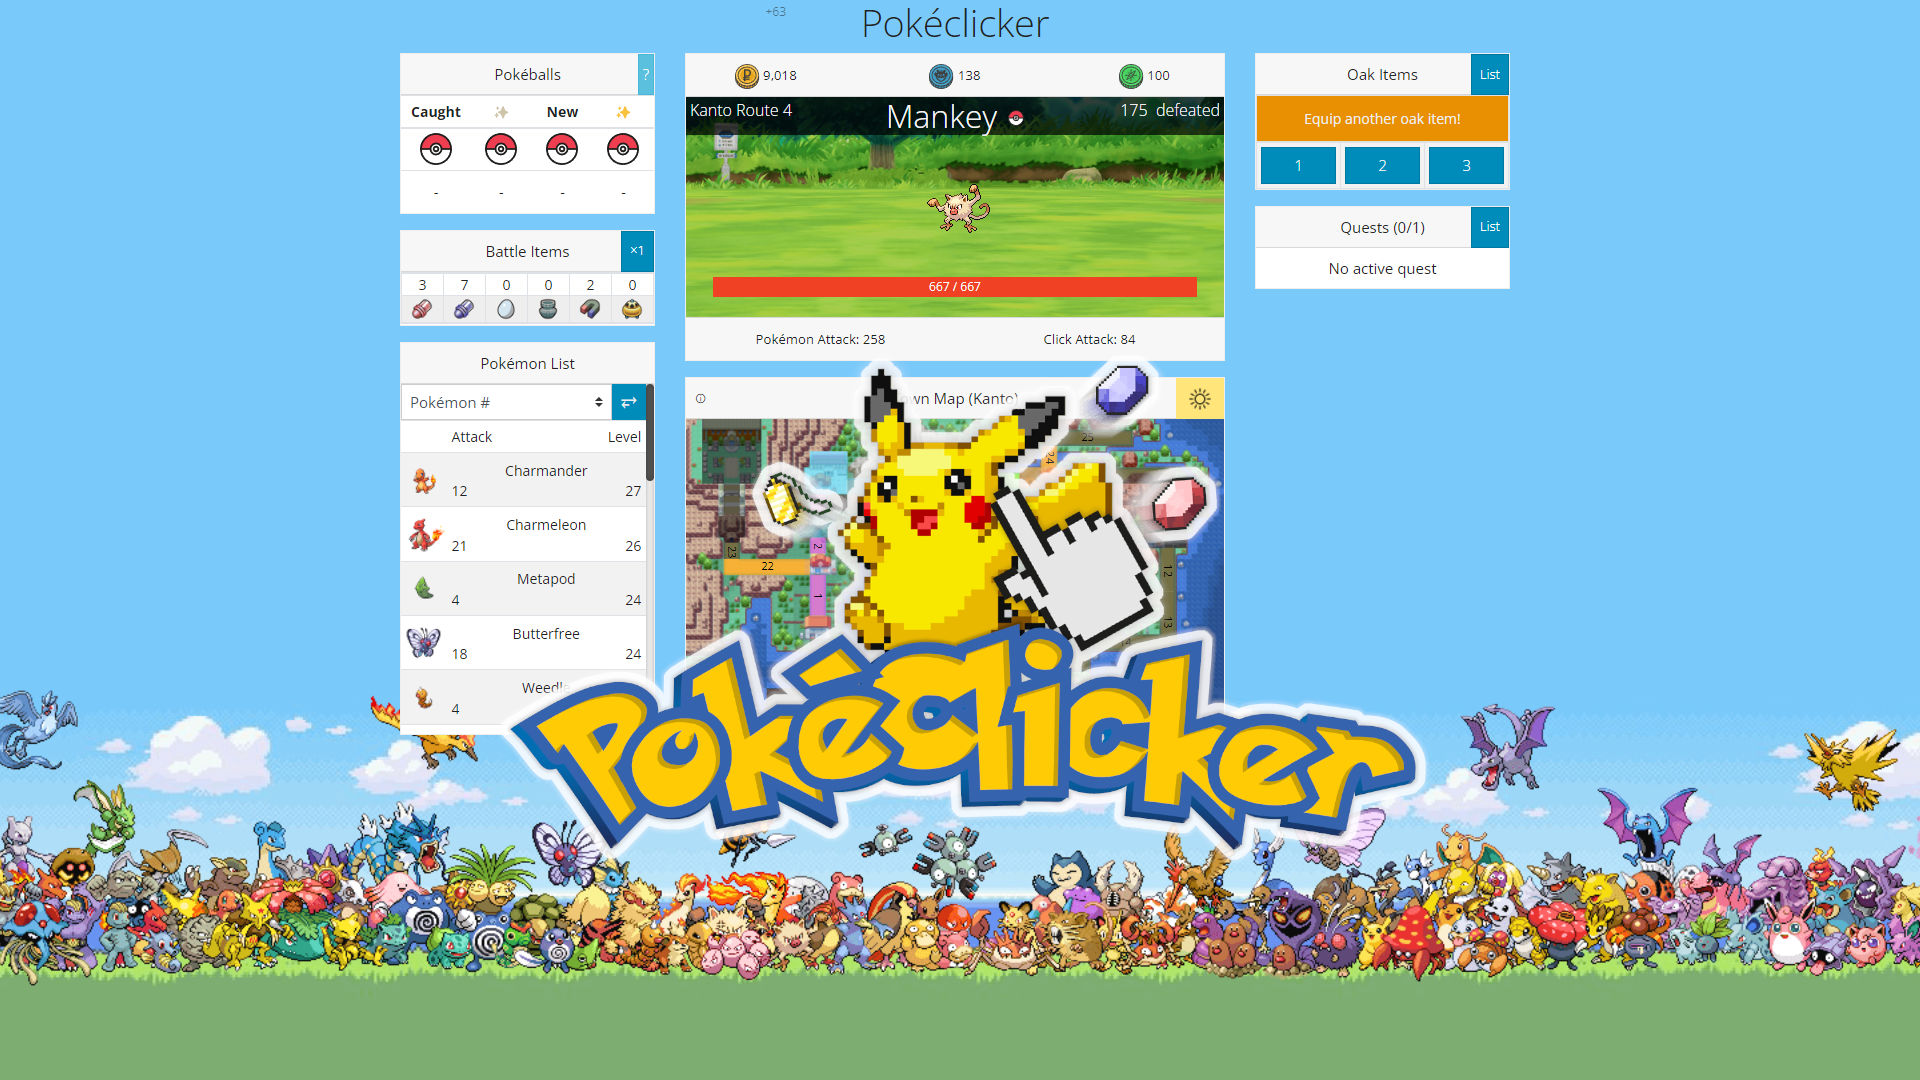 Pokéclicker codes free shiny Pokémon and more